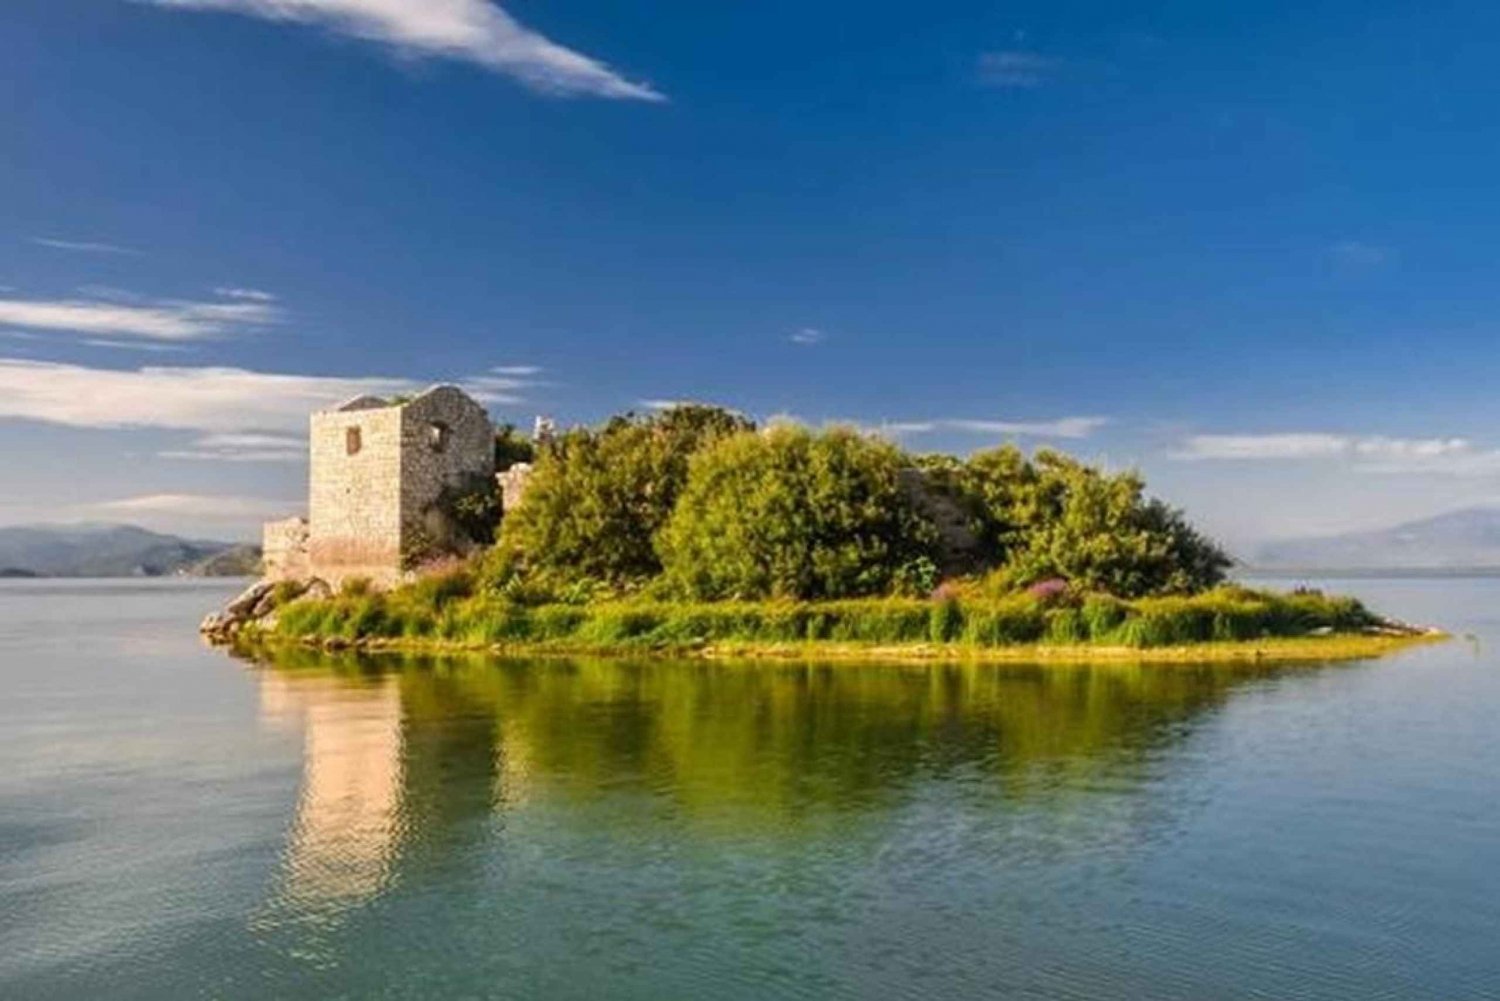 Lake Skadar: Grmozur Fortress and St. Nicholas' Monastery